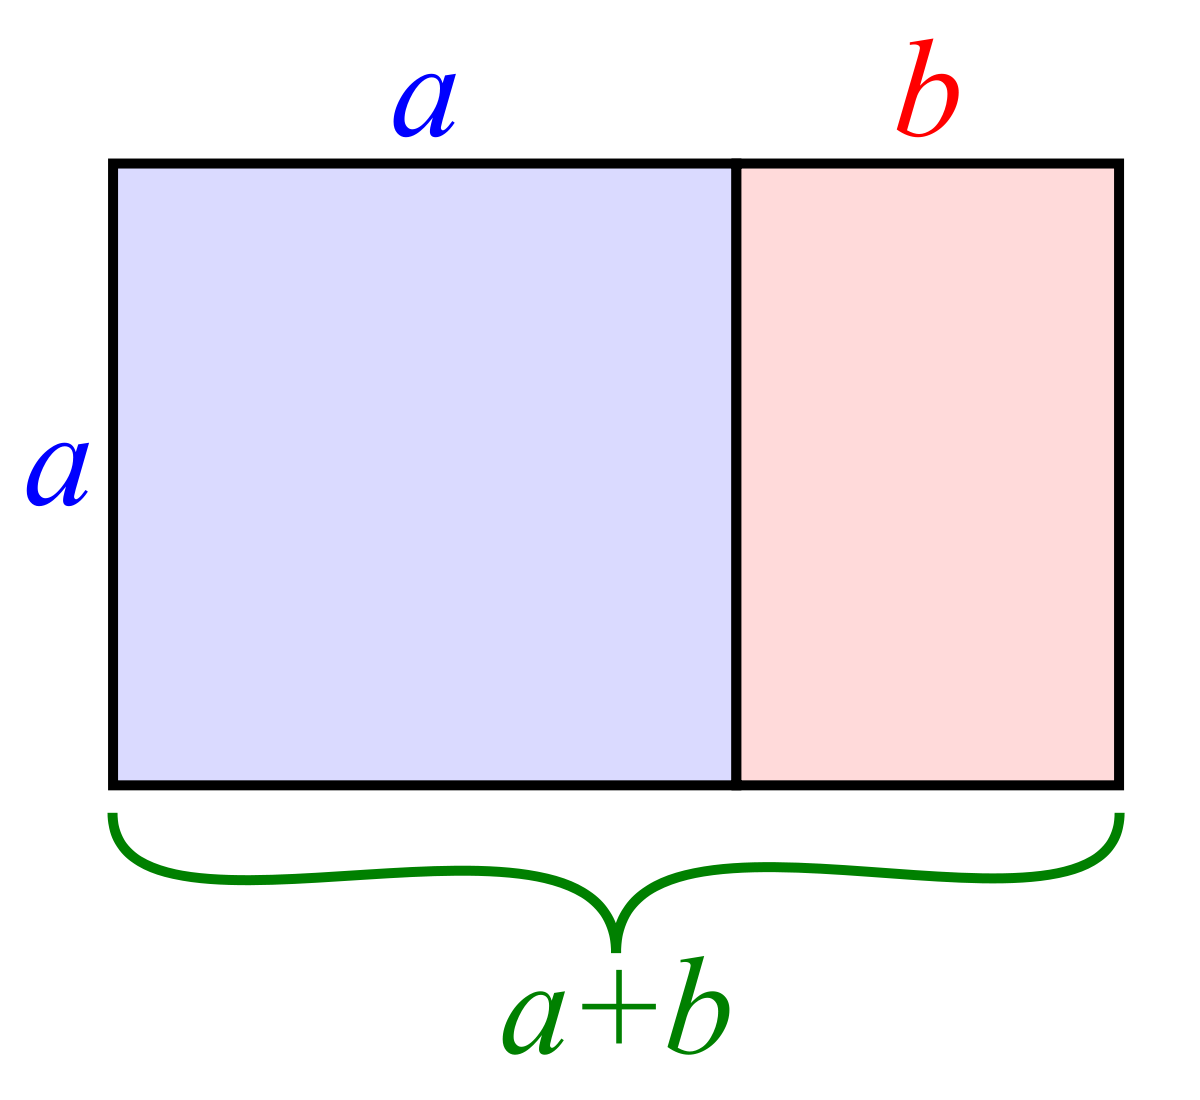 golden rectangle - wikipedia